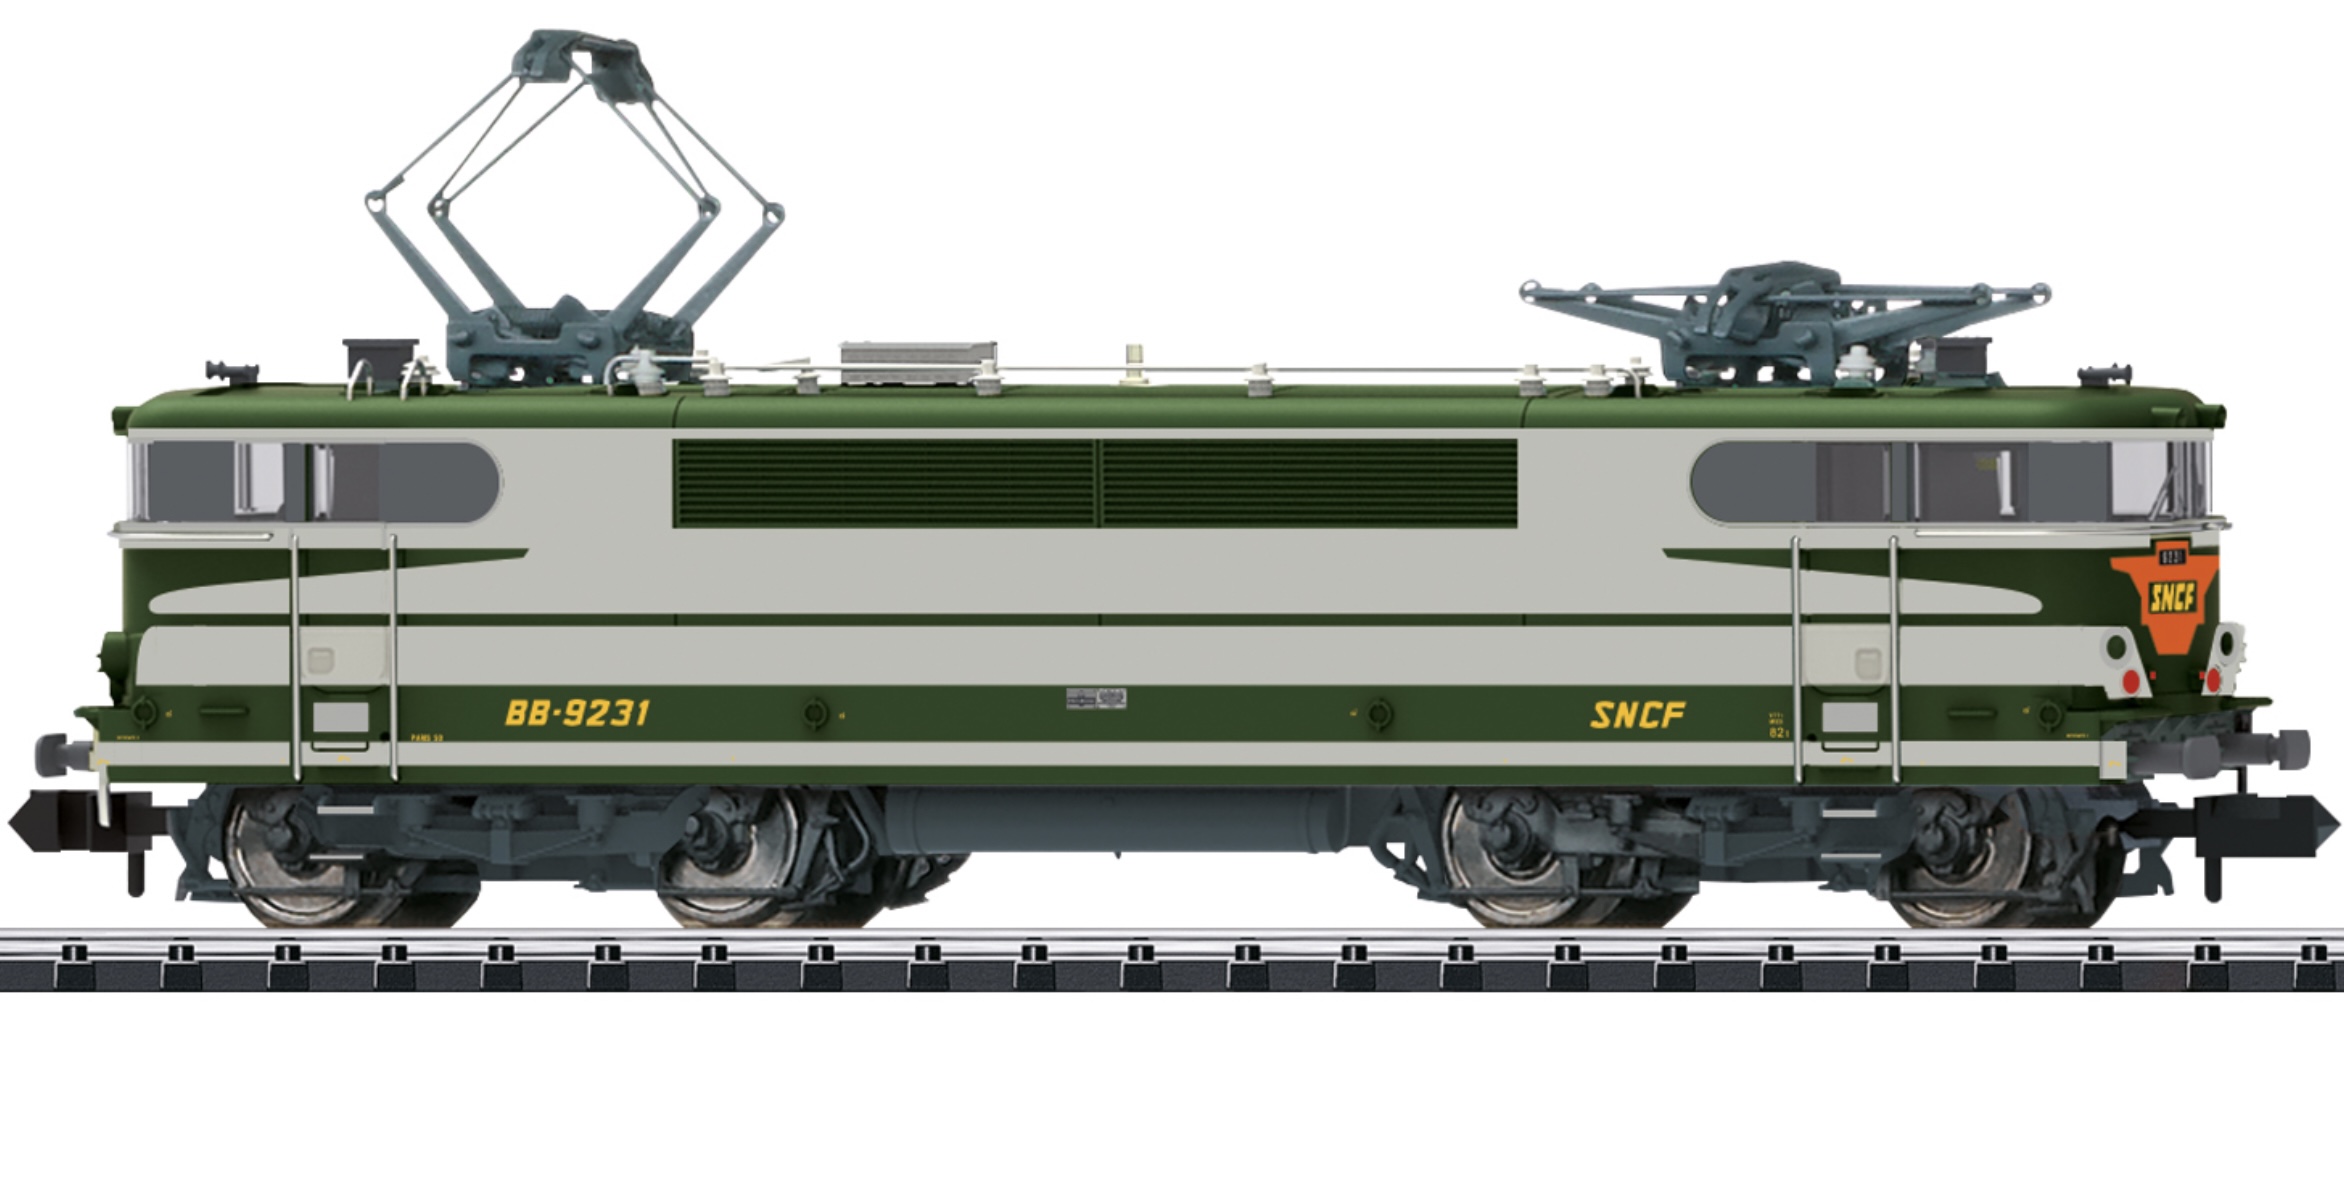 N Scale - Minitrix - 16693 - Locomotive, Electric, Class BB9200, Epoch IV - SNCF - BB 9231